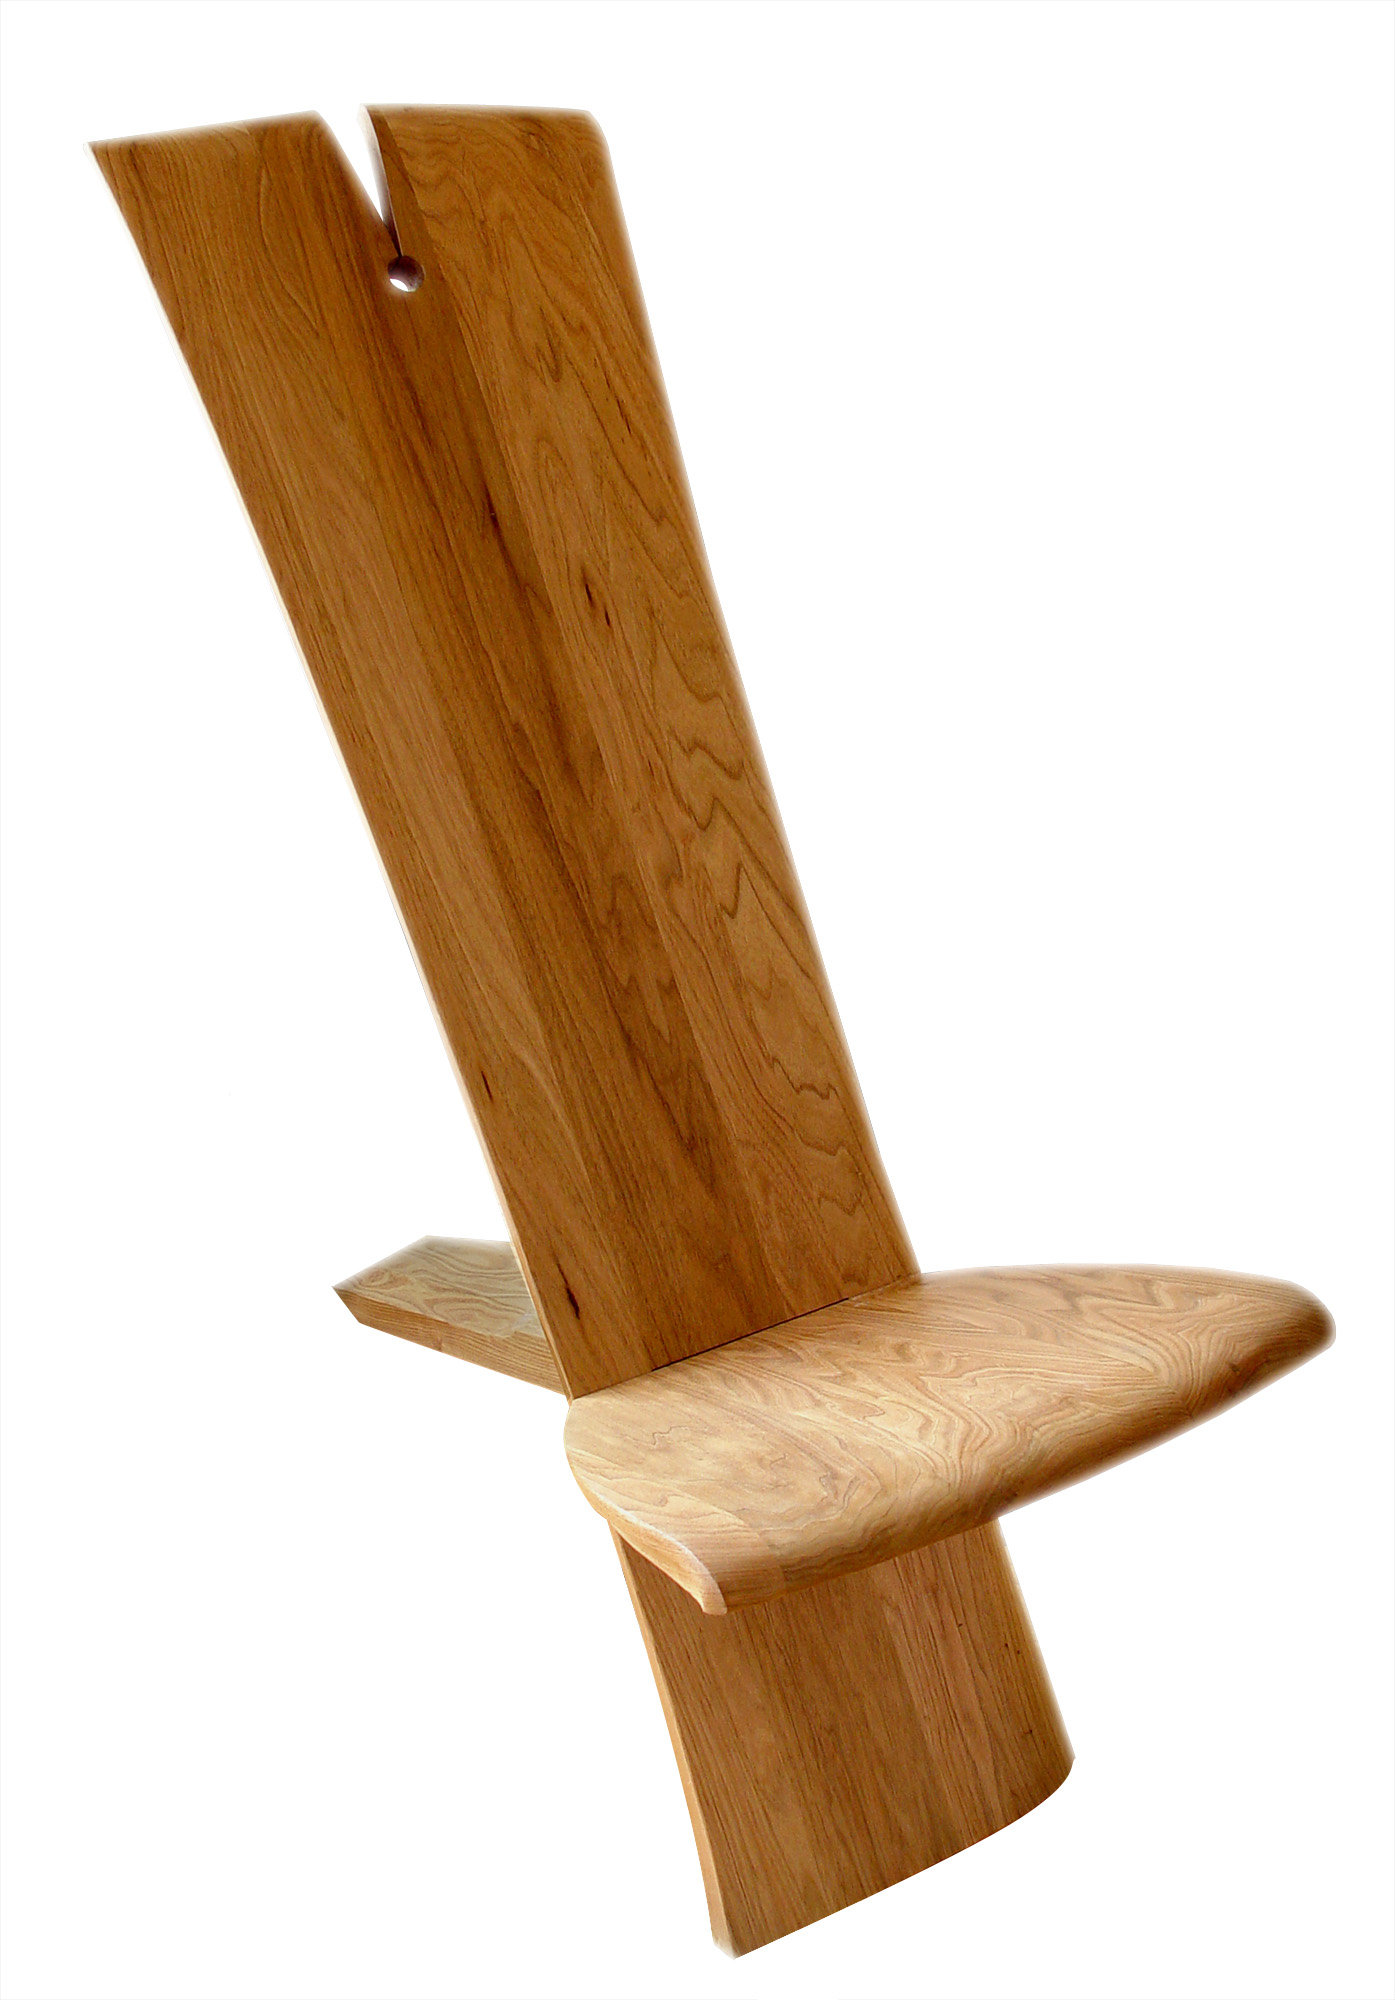 African/Art Nouveau Chair by Mathieu Patoine (Wood Chair 